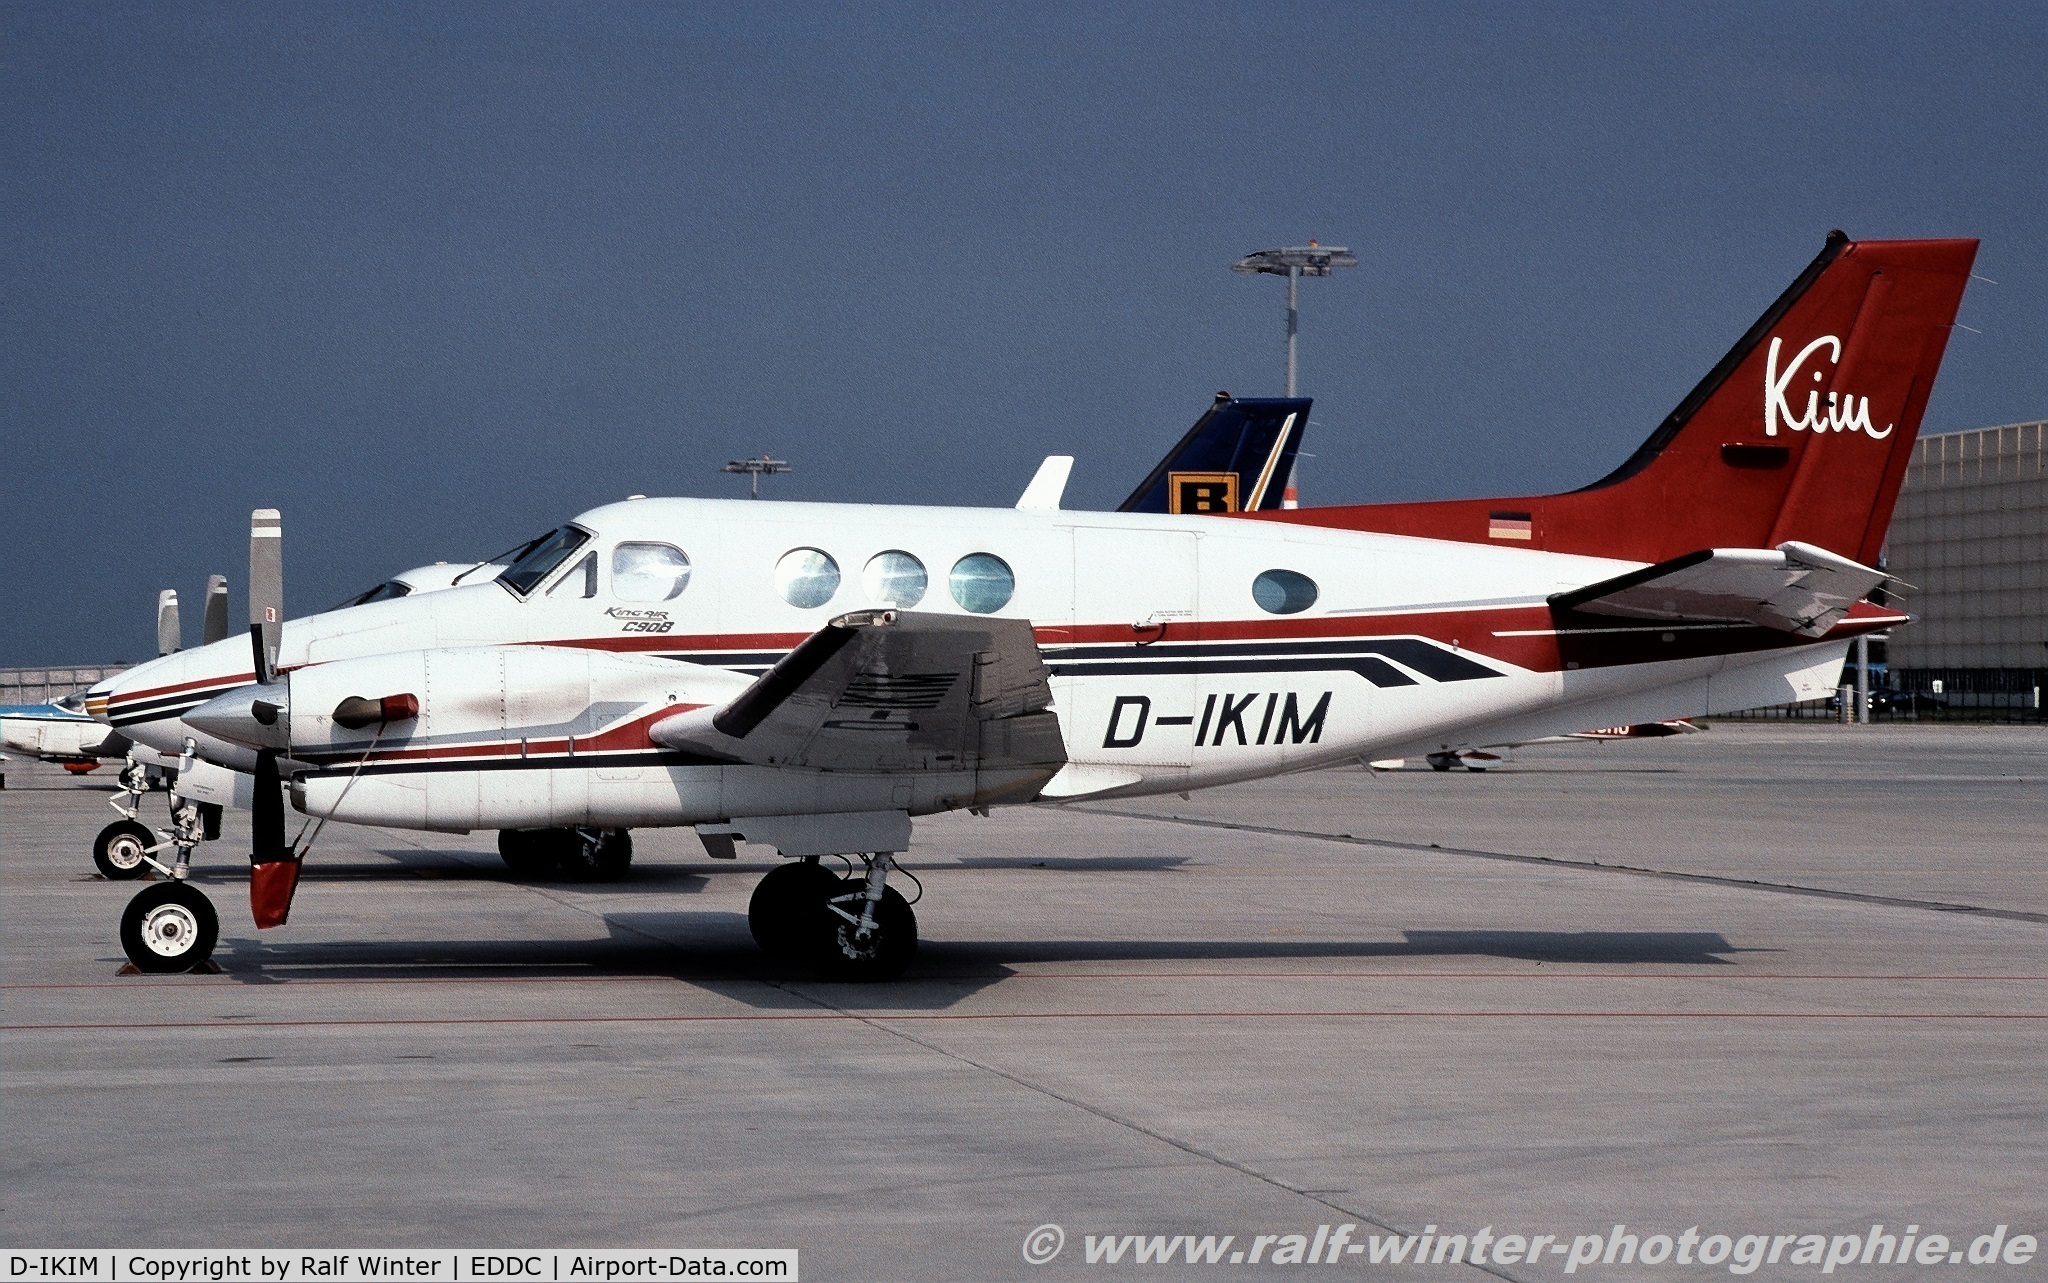 D-IKIM, 1992 Beech C90B King Air C/N LJ-1324, Beech C90B King Air - Kimmerle Gewerbebau - LJ-1324 - D-IKIM - 1996 - DRS